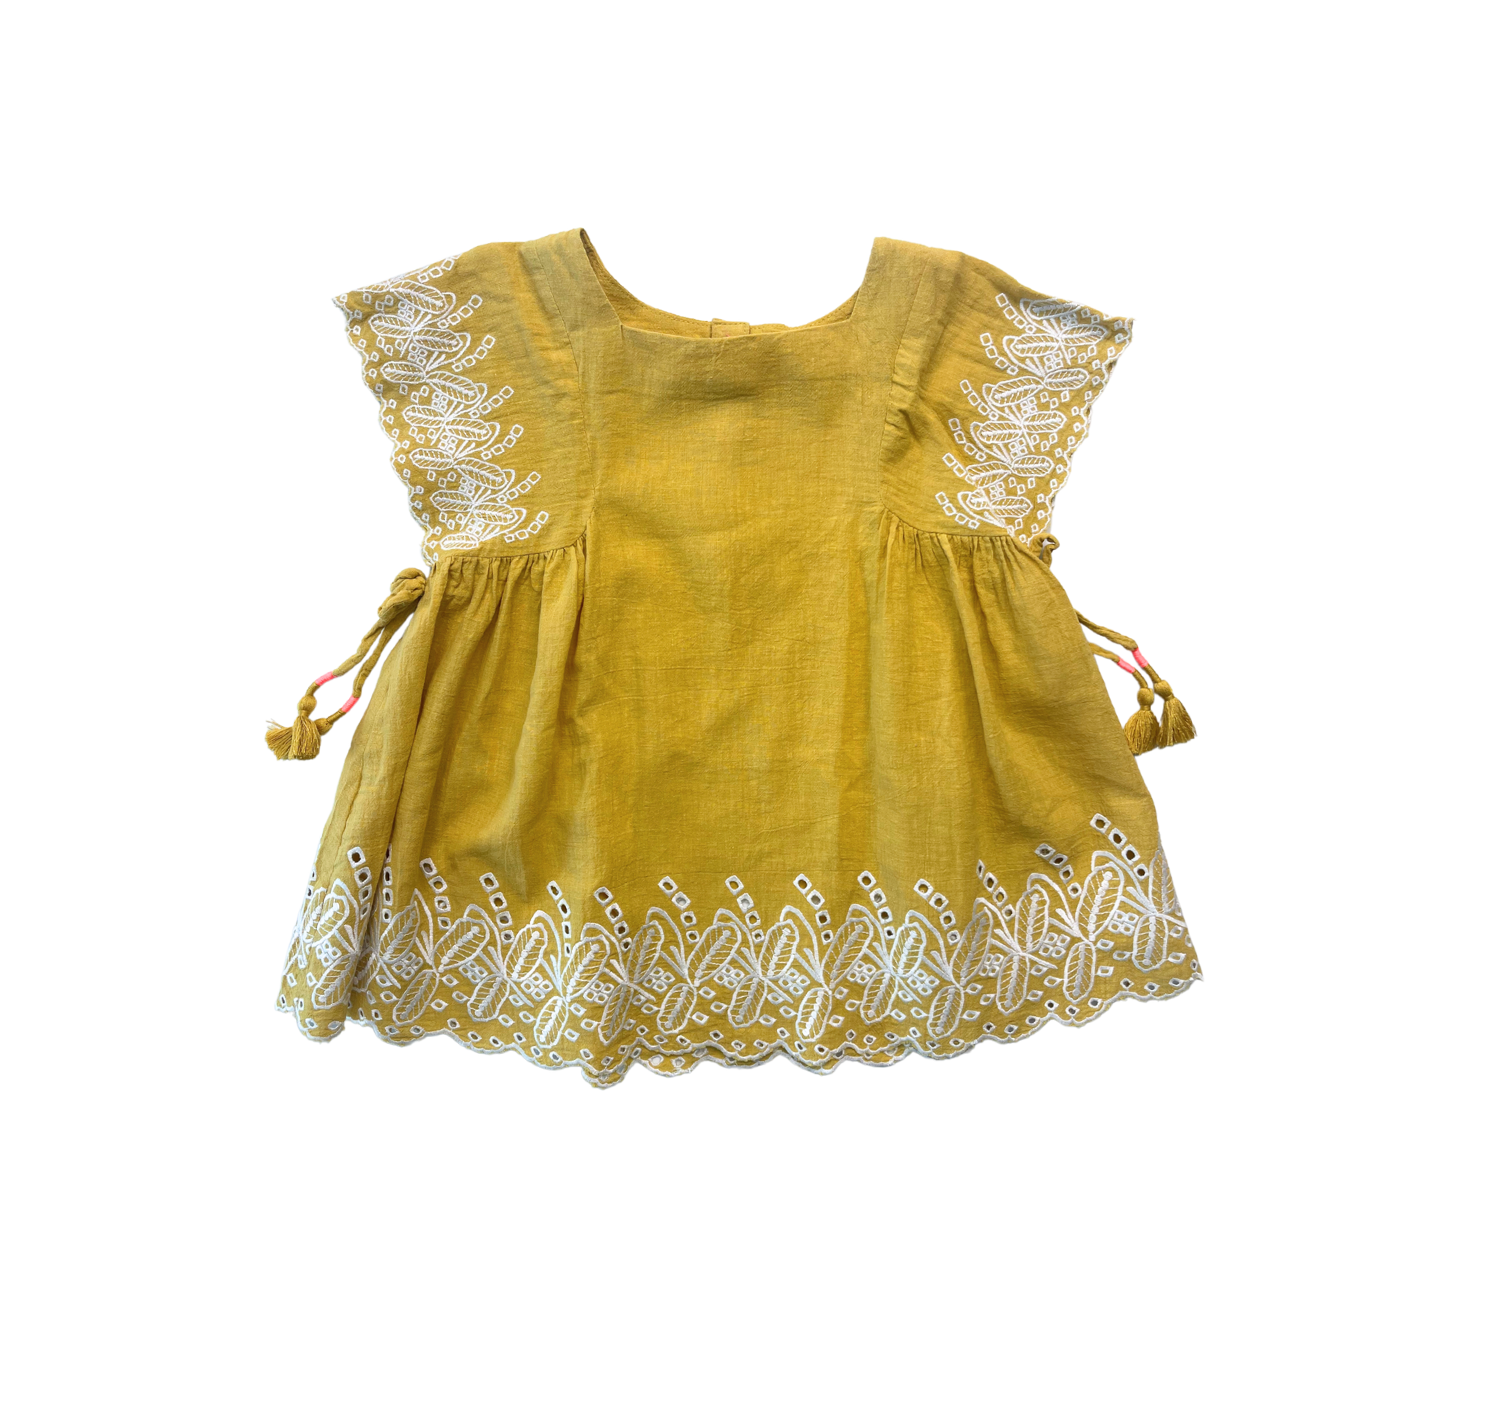 LOUISE MISHA - Robe jaune brodée - 3 ans